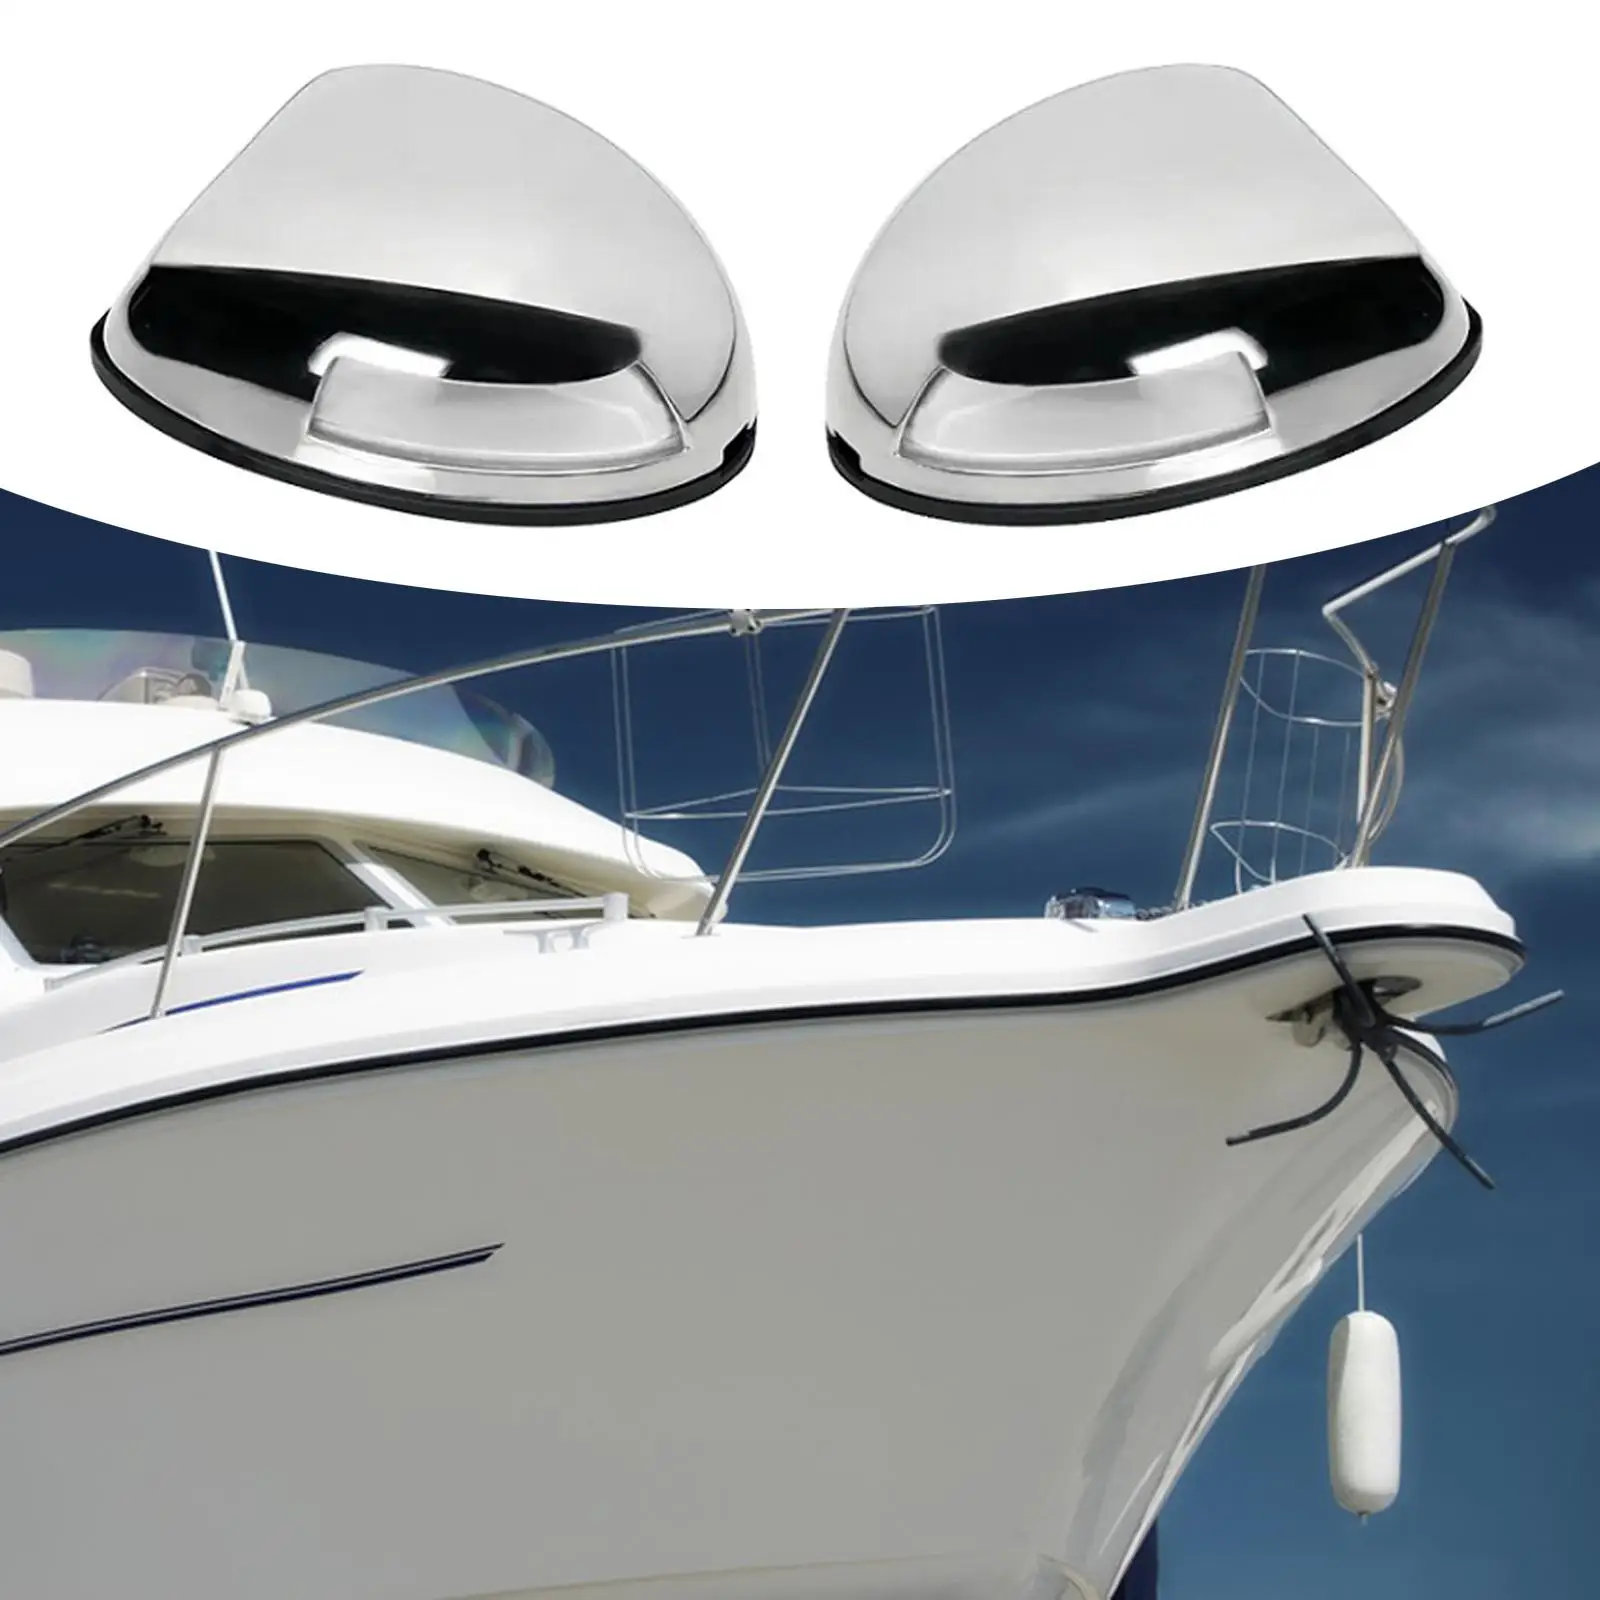 Boat Navigation Lights IP66 Waterproof E011070 for Marine Yacht Pontoon